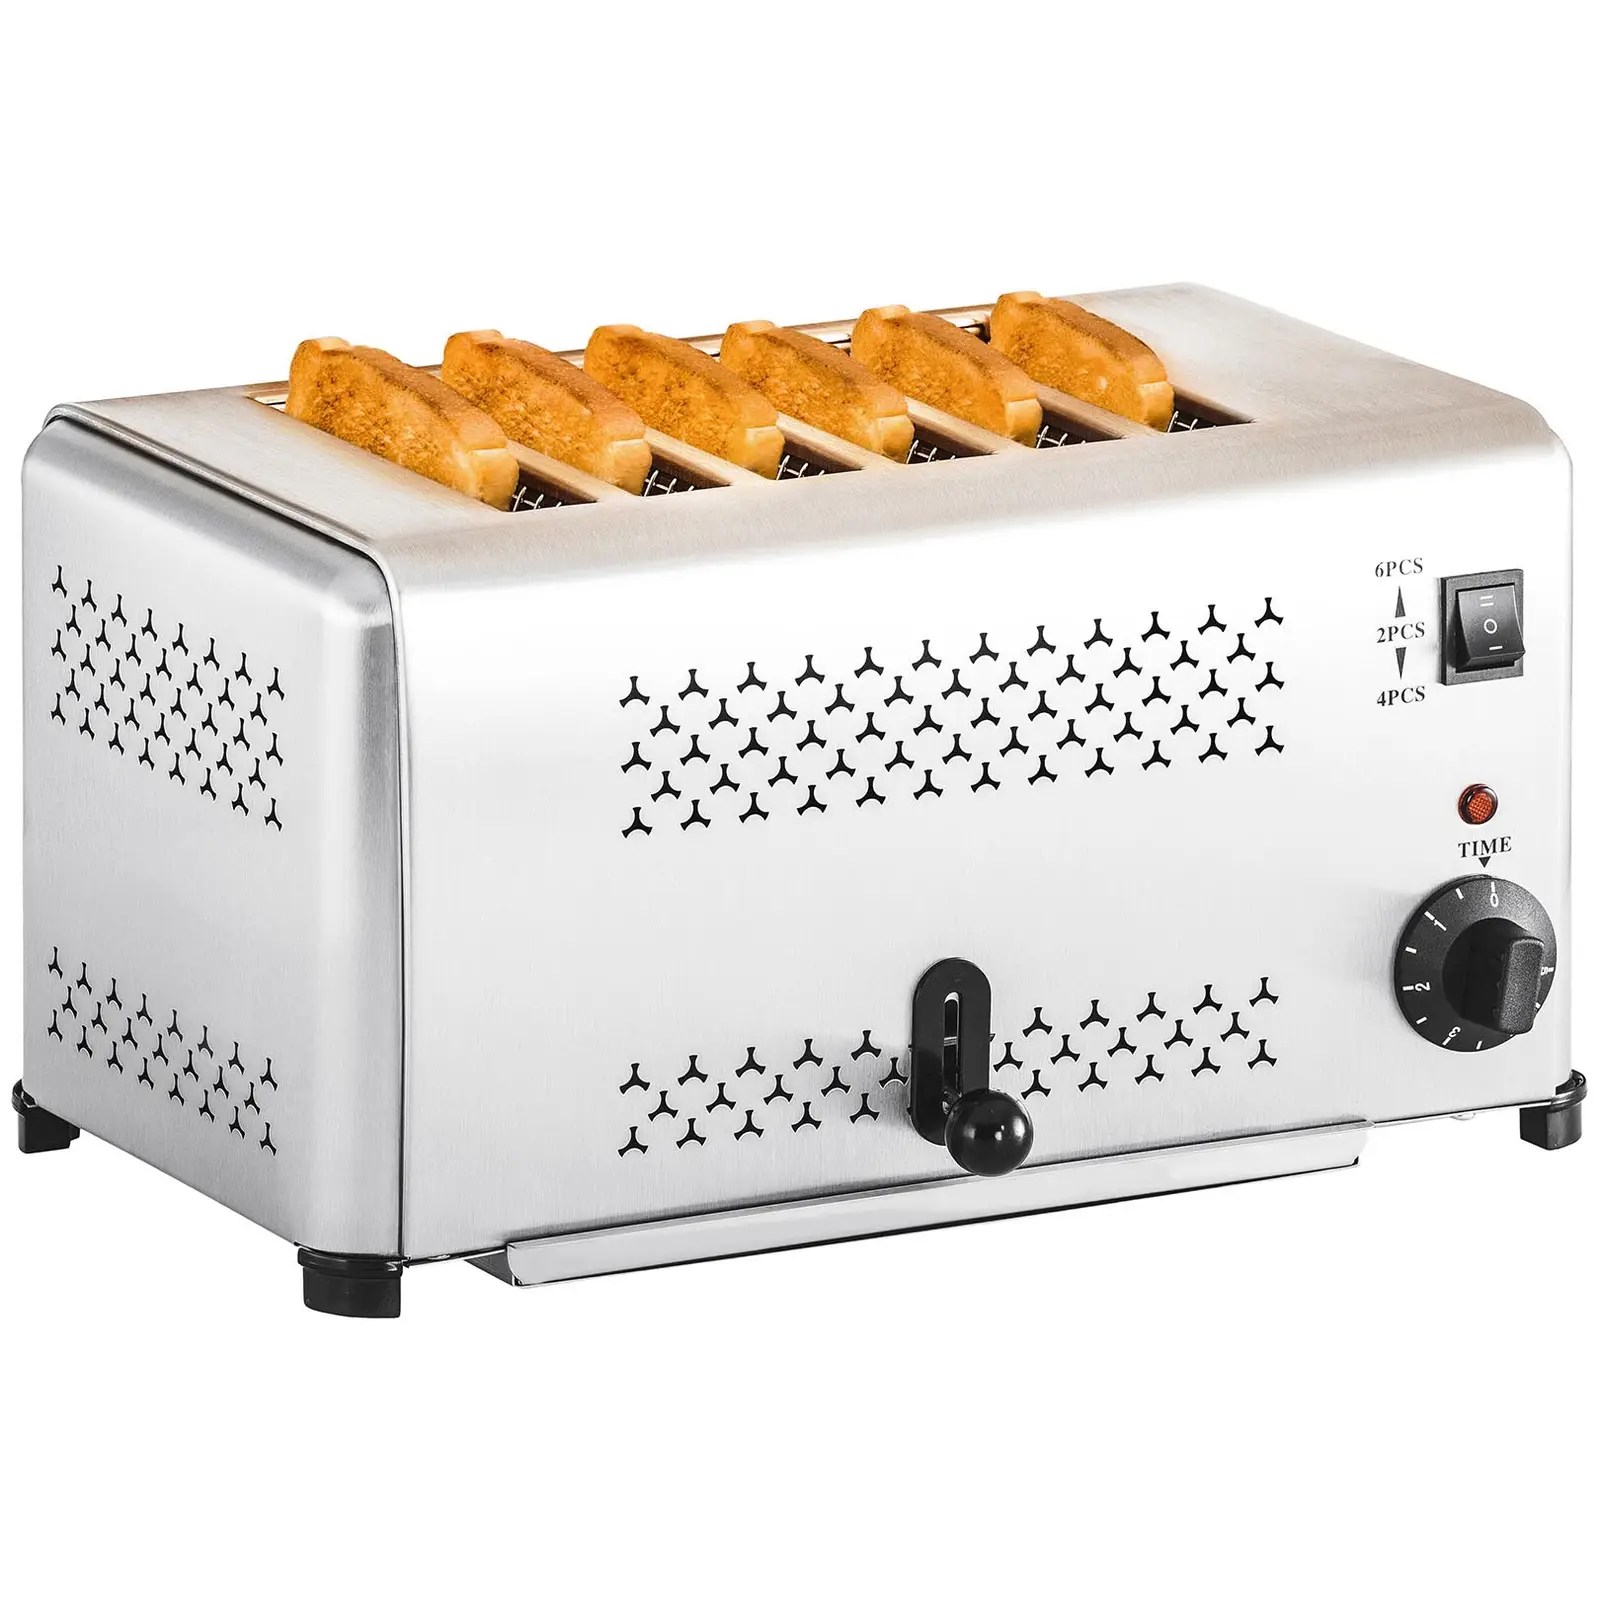 Horeca-toaster met 6 gleuven